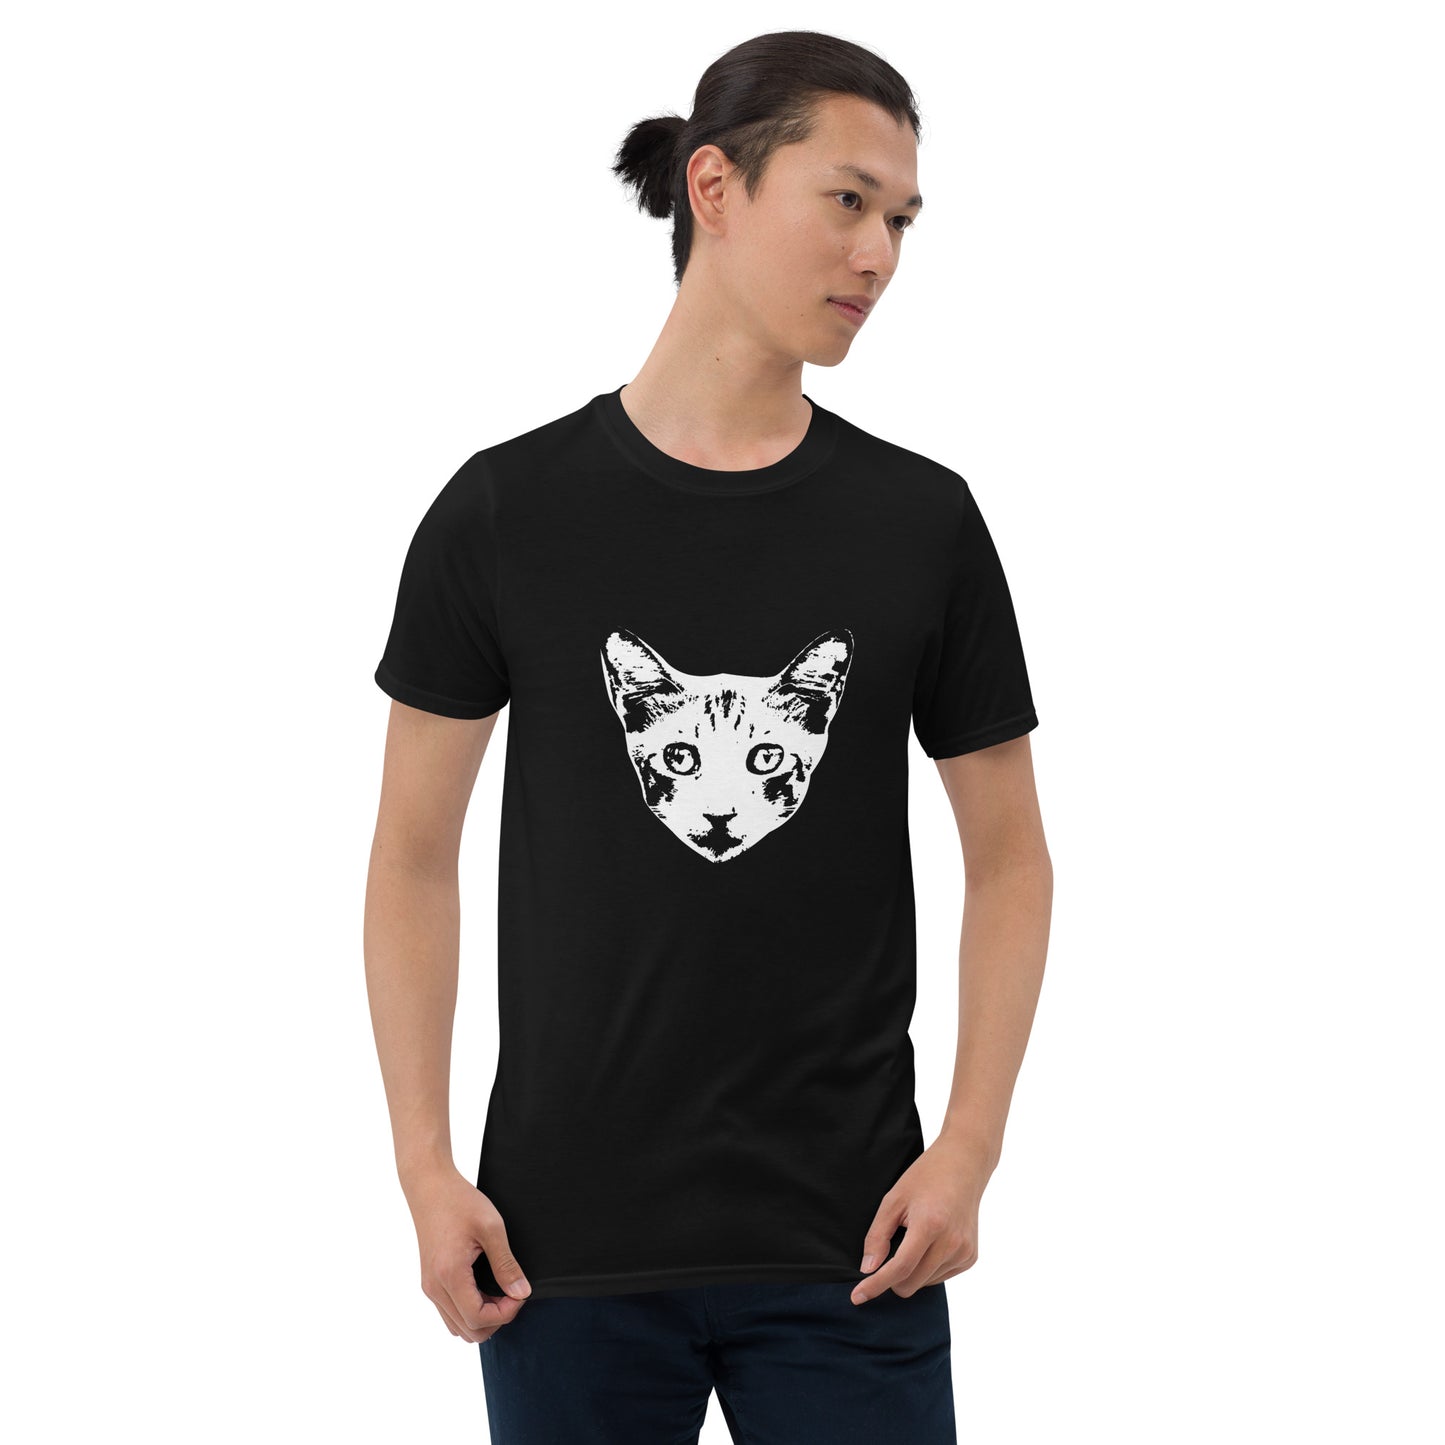 MEWMEW Cat on T-Shirt